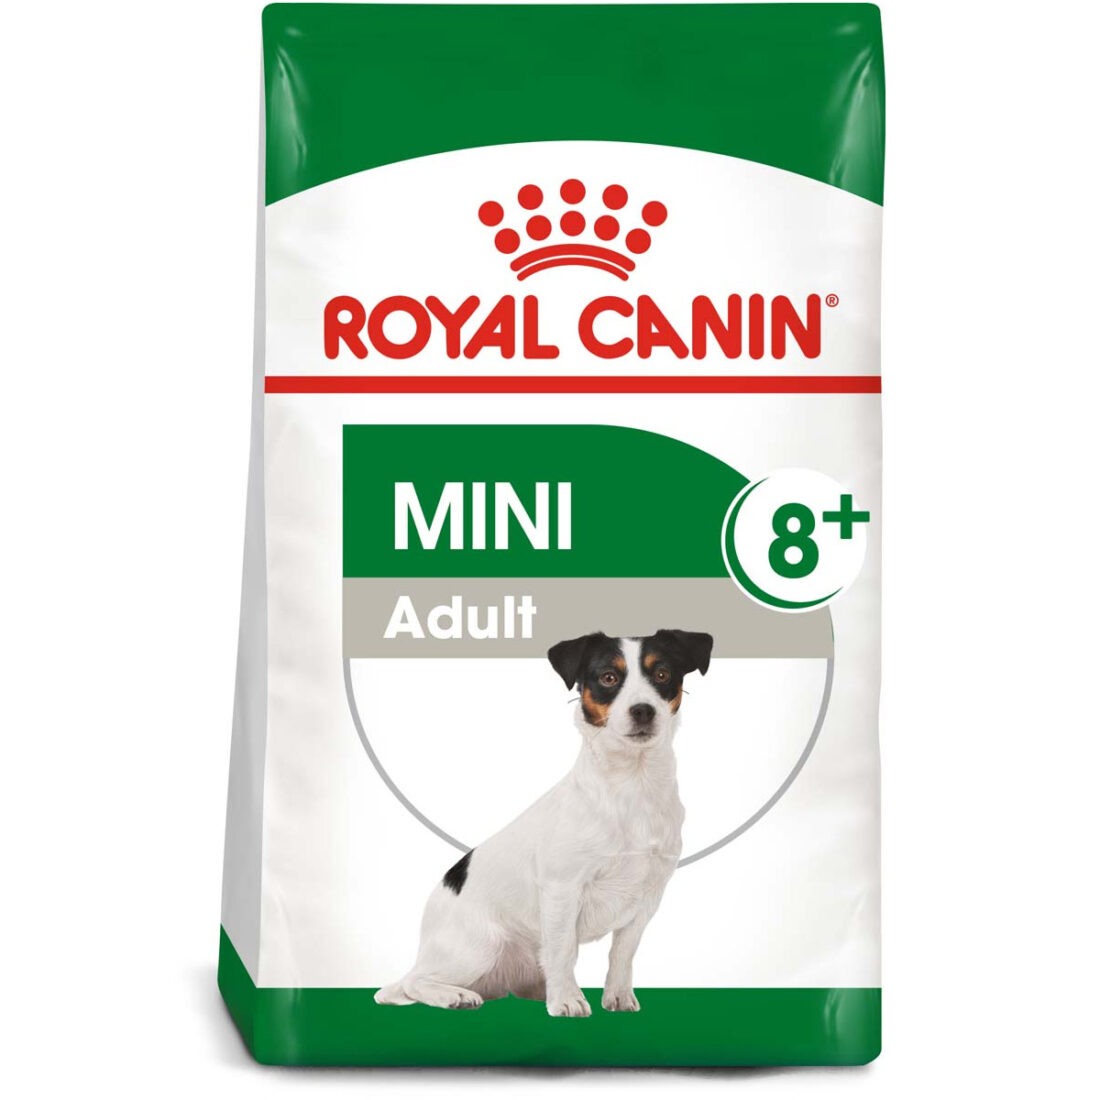 ROYAL CANIN MINI Adult 8+